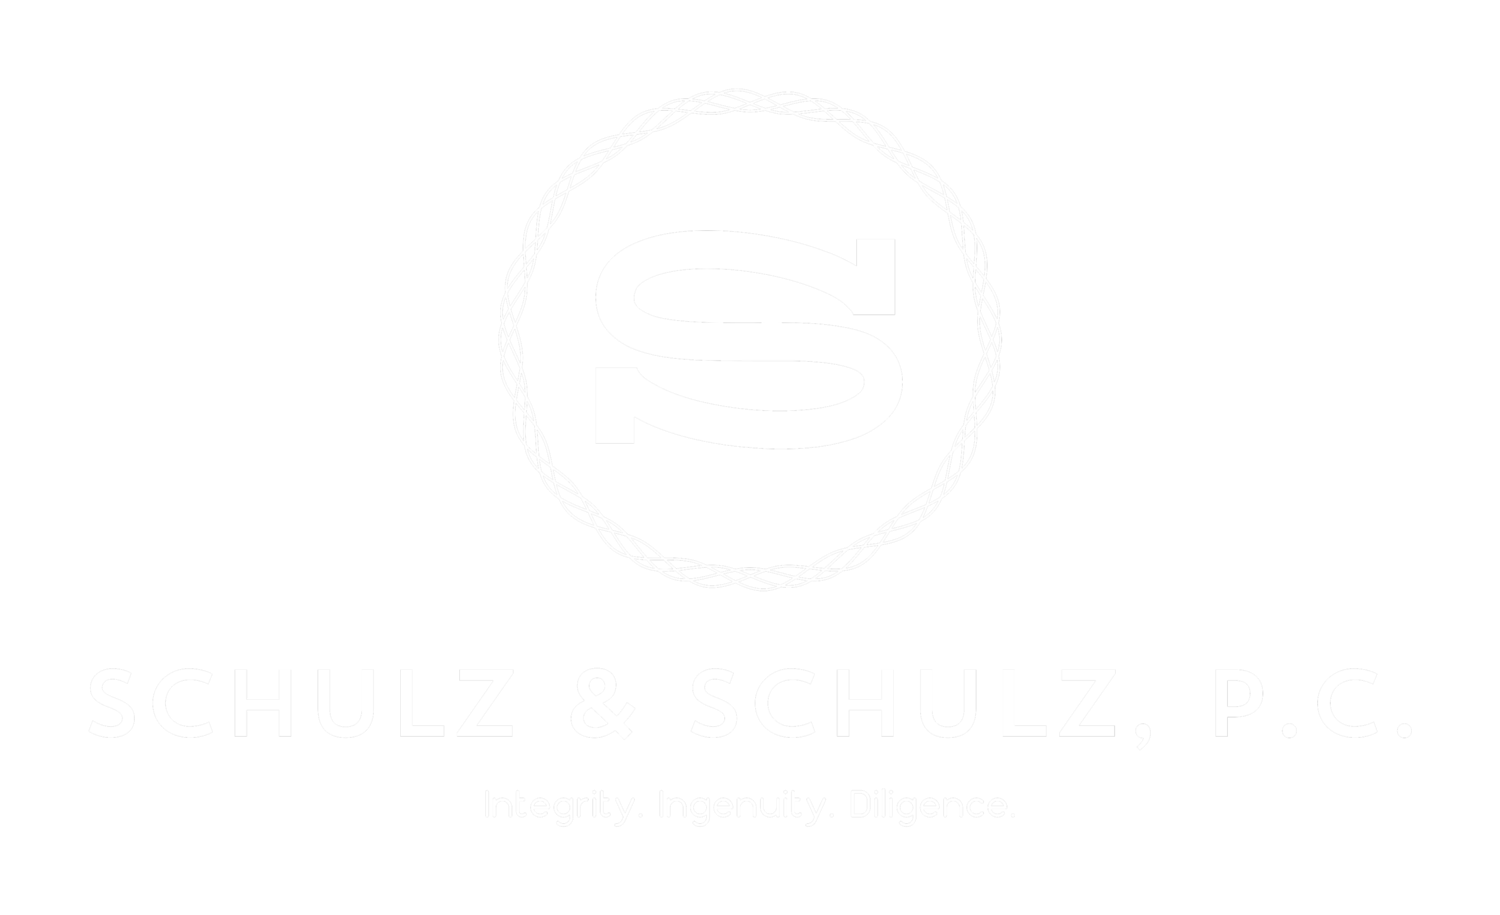 Schulz & Schulz, P.C. - Integrity.  Ingenuity.  Diligence.